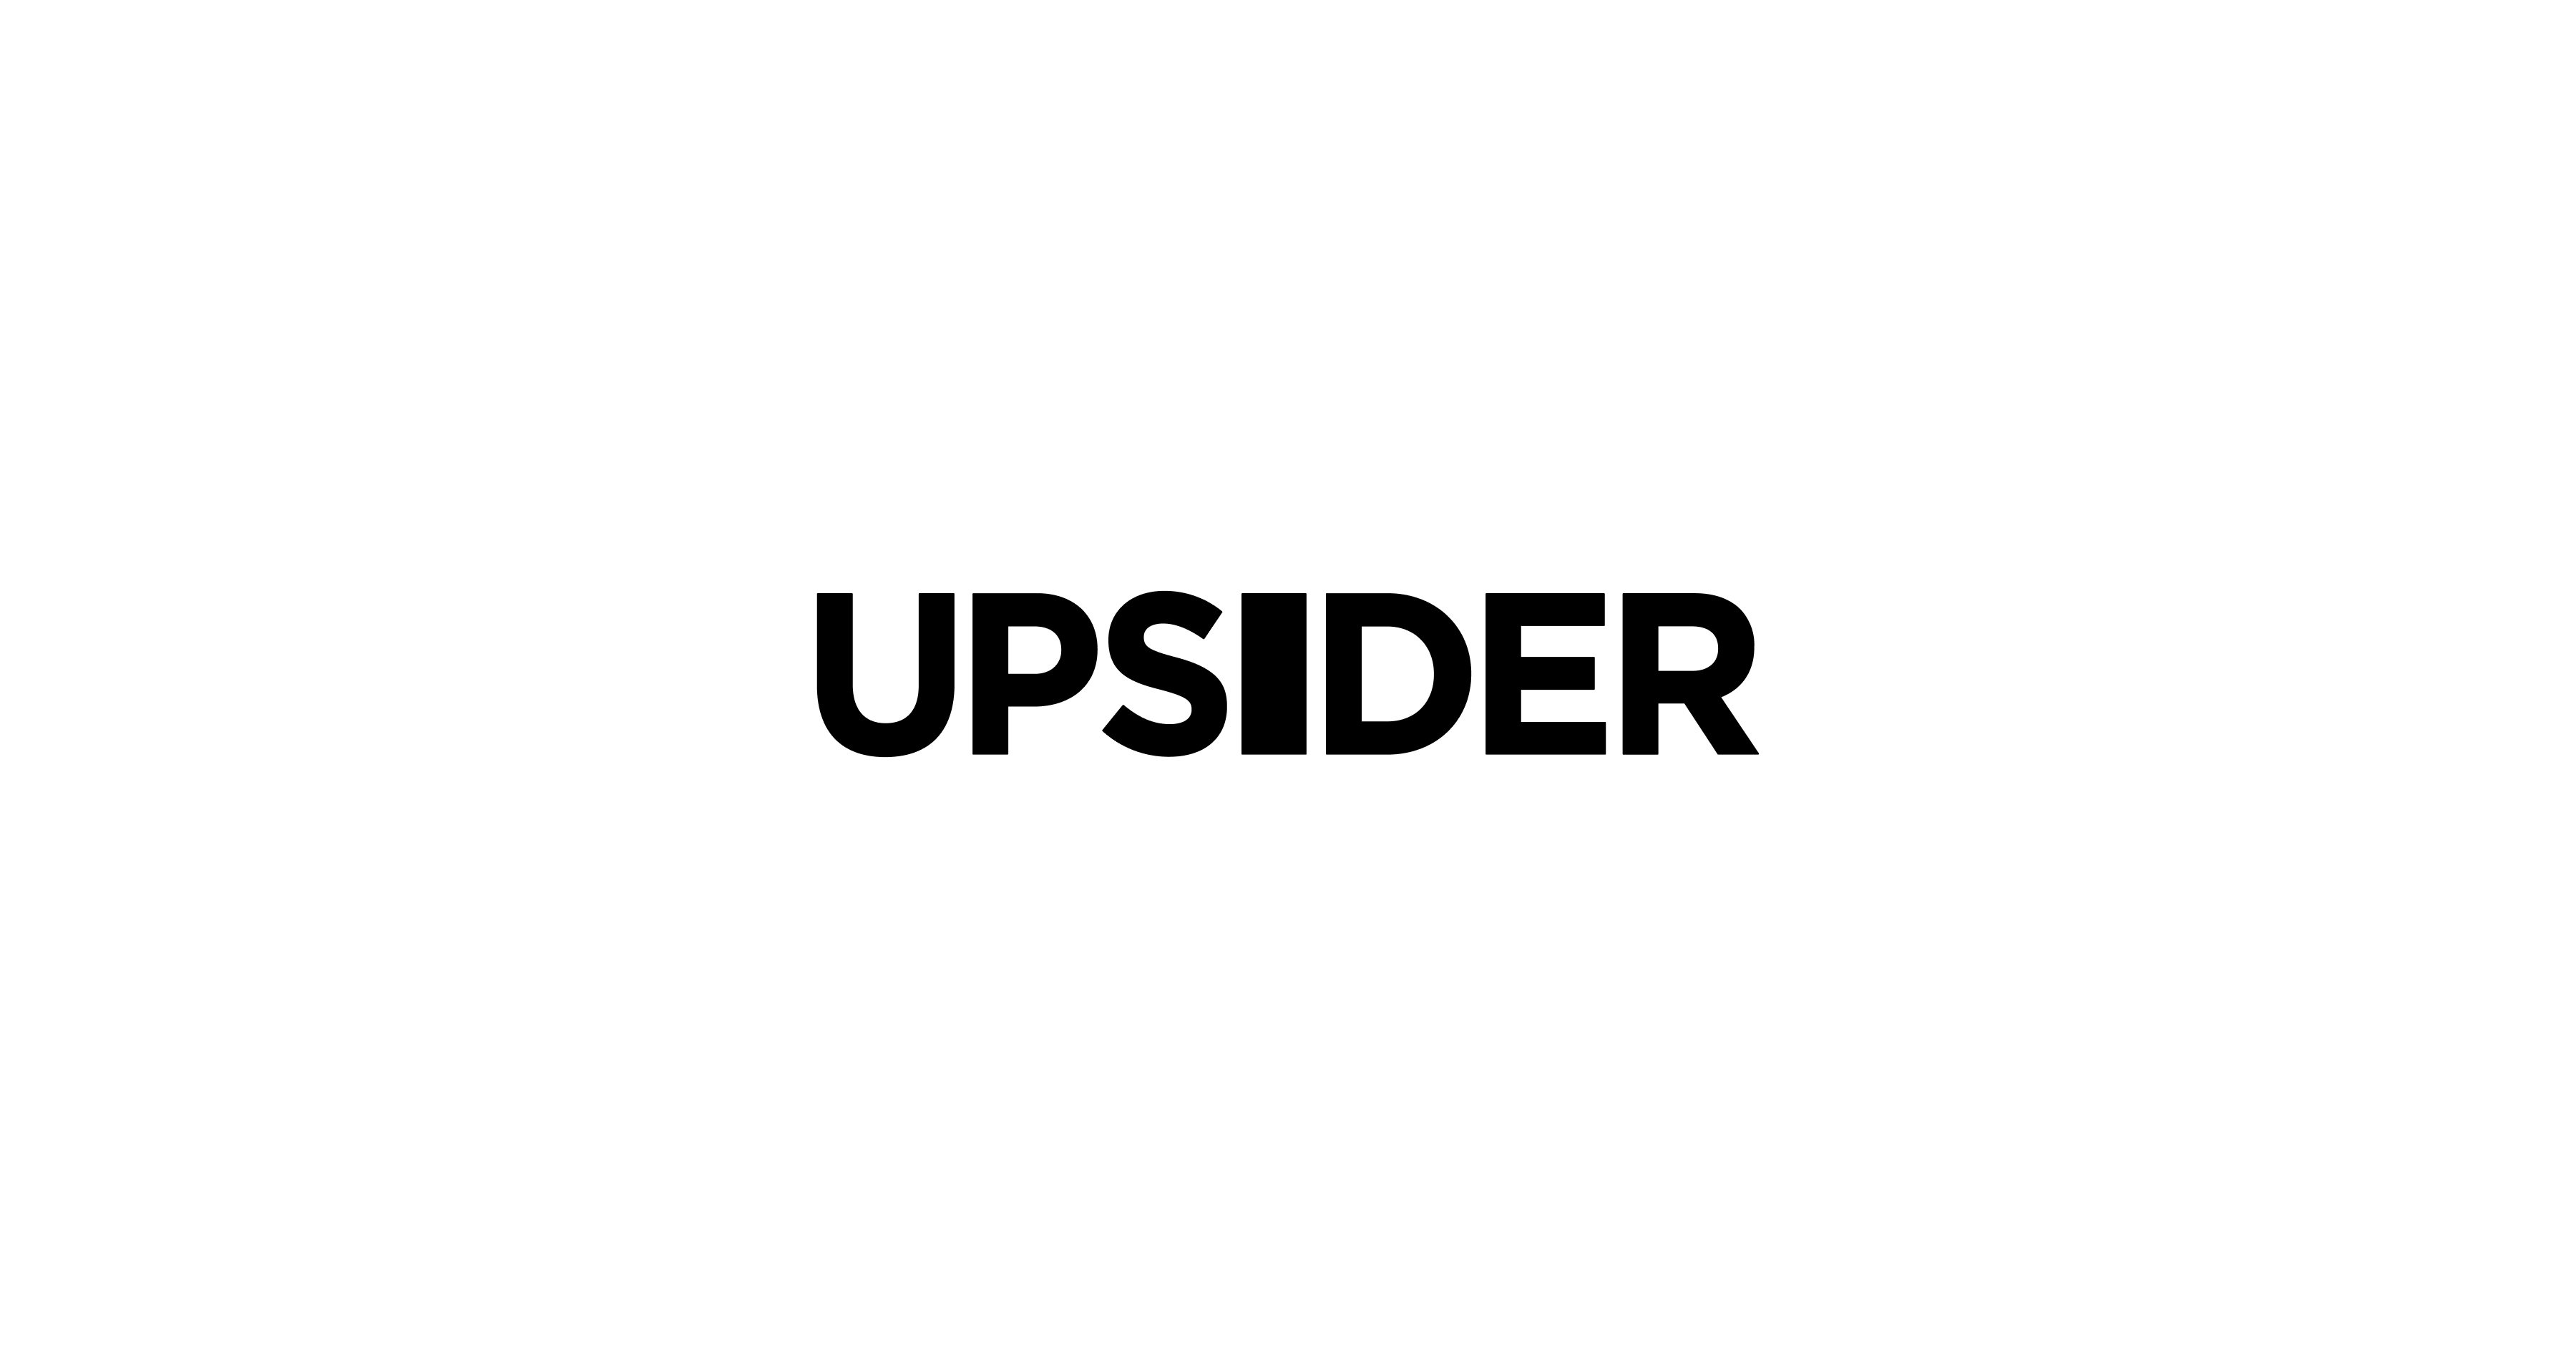 E150. UPSIDER Capital【インターン / Capital / Business】